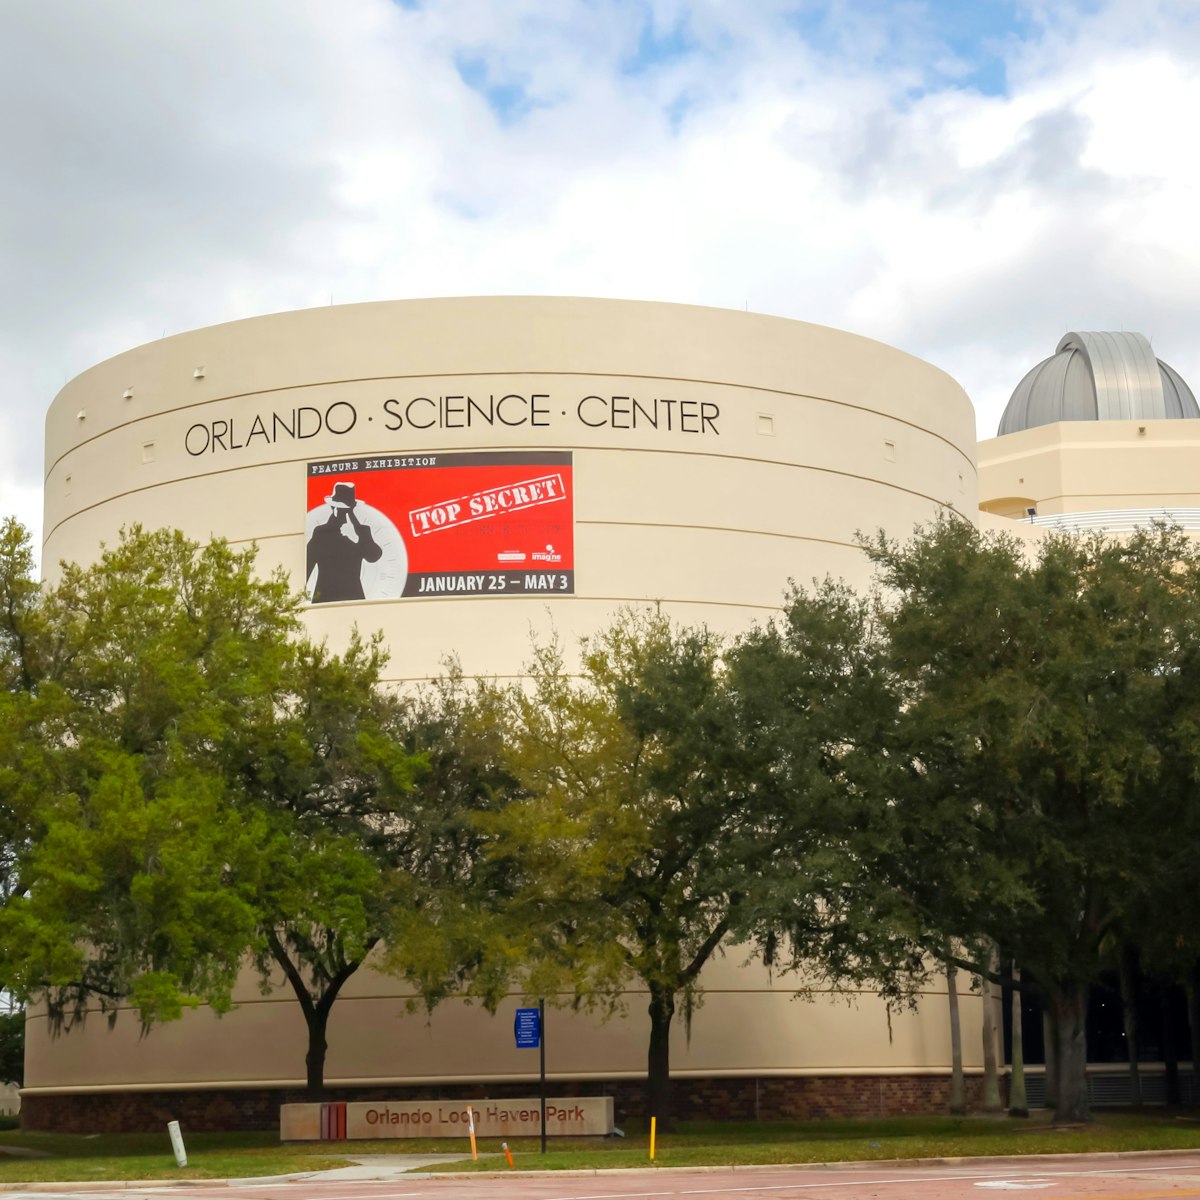 Orlando, Florida, USA - February 20, 2020: Orlando Science Center in Orlando, Florida, USA. The Orlando Science Center is a private science museum.